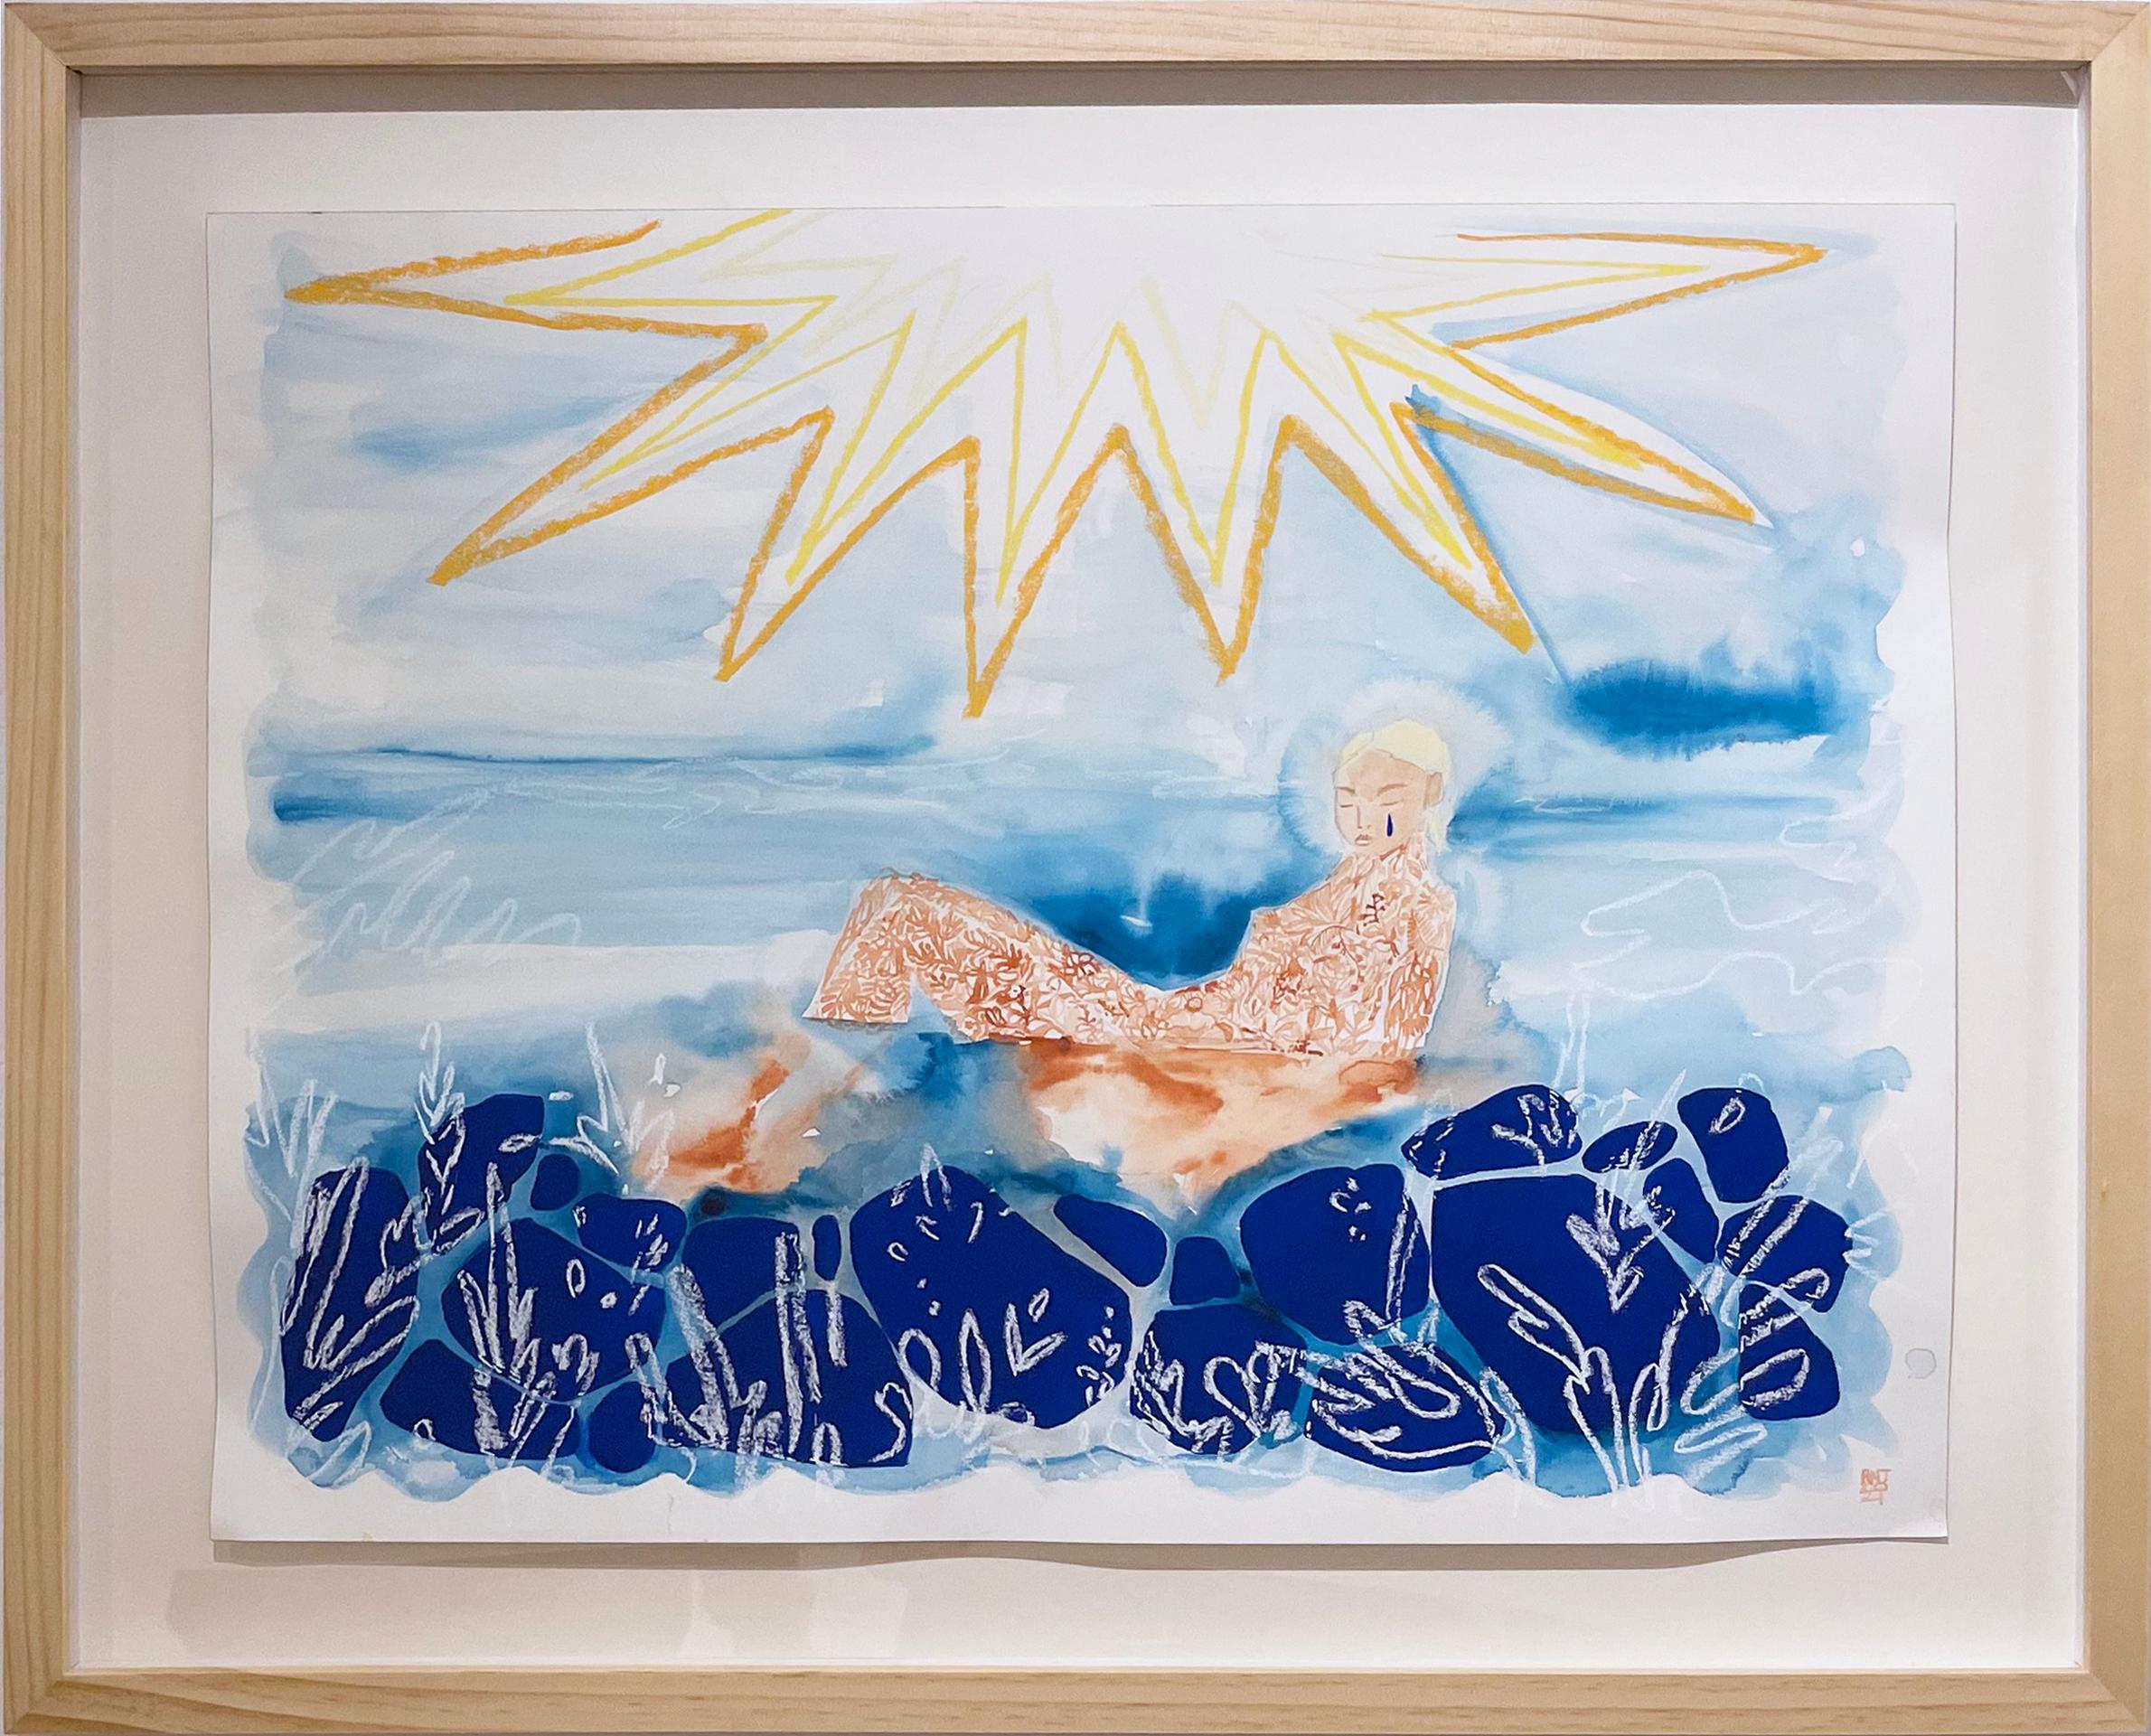 Sunbath, 2021, seascape, female figure, swimmer, ocean, sun, blue, yellow, gold